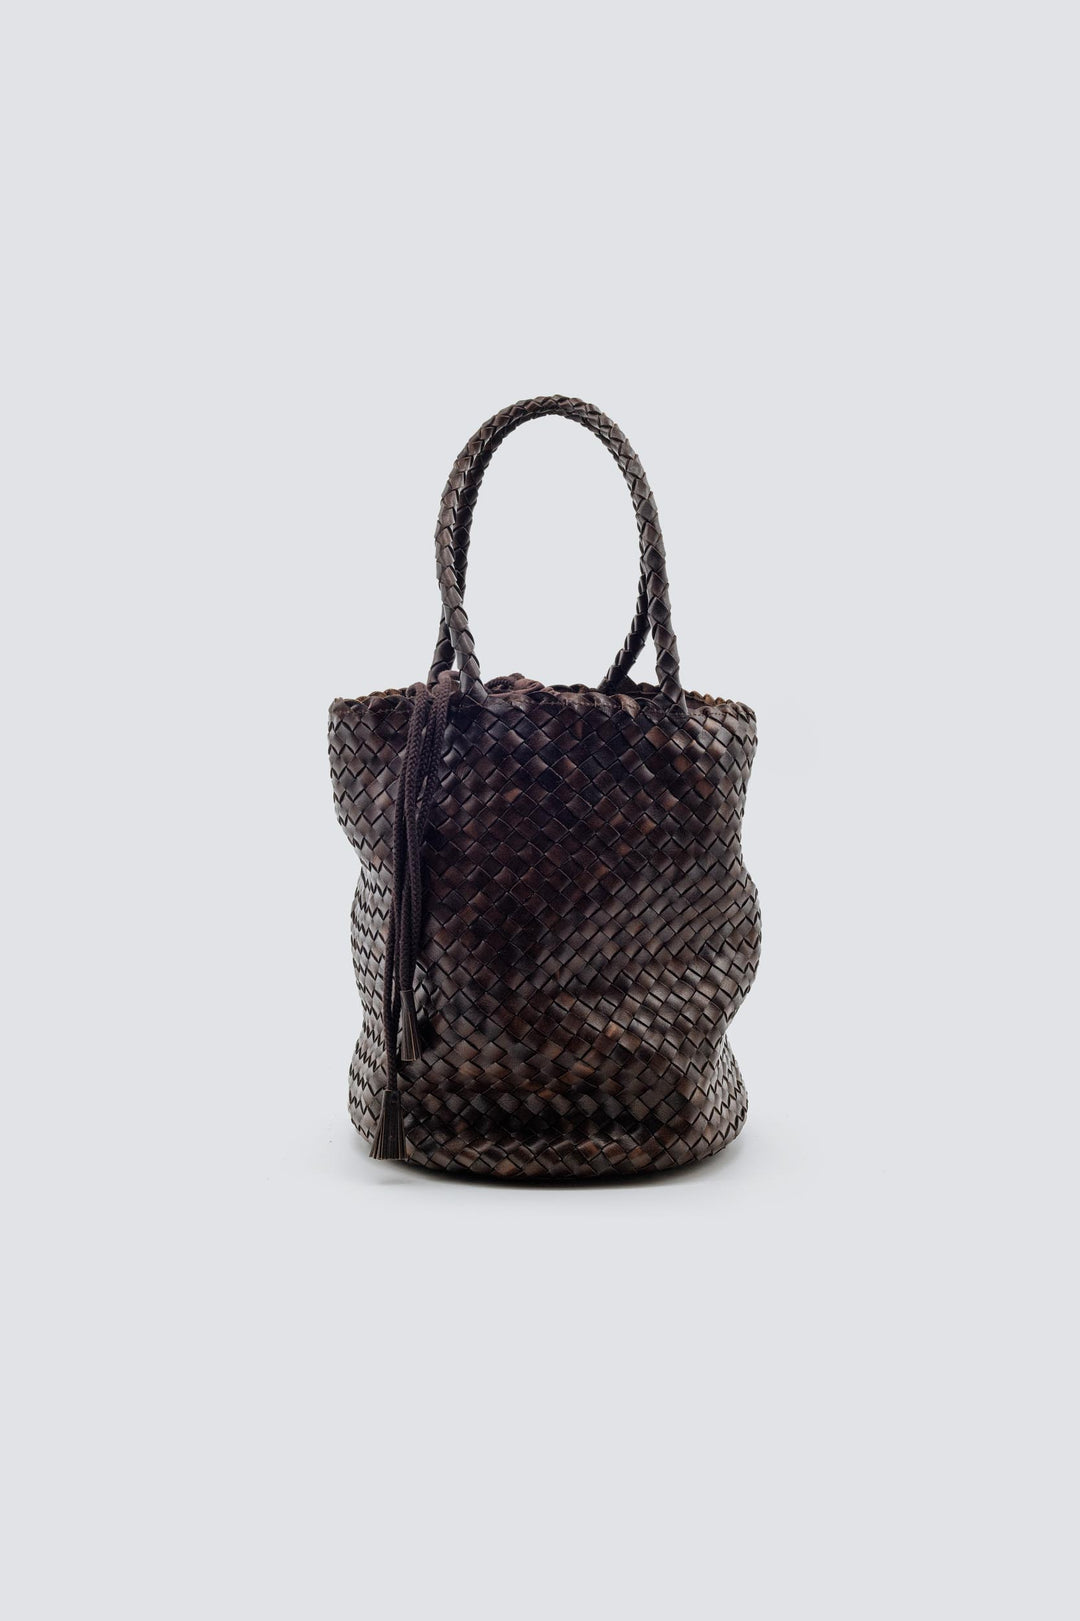 Dragon Diffusion woven leather bag handmade - Jackie Bucket Lining Dark Brown